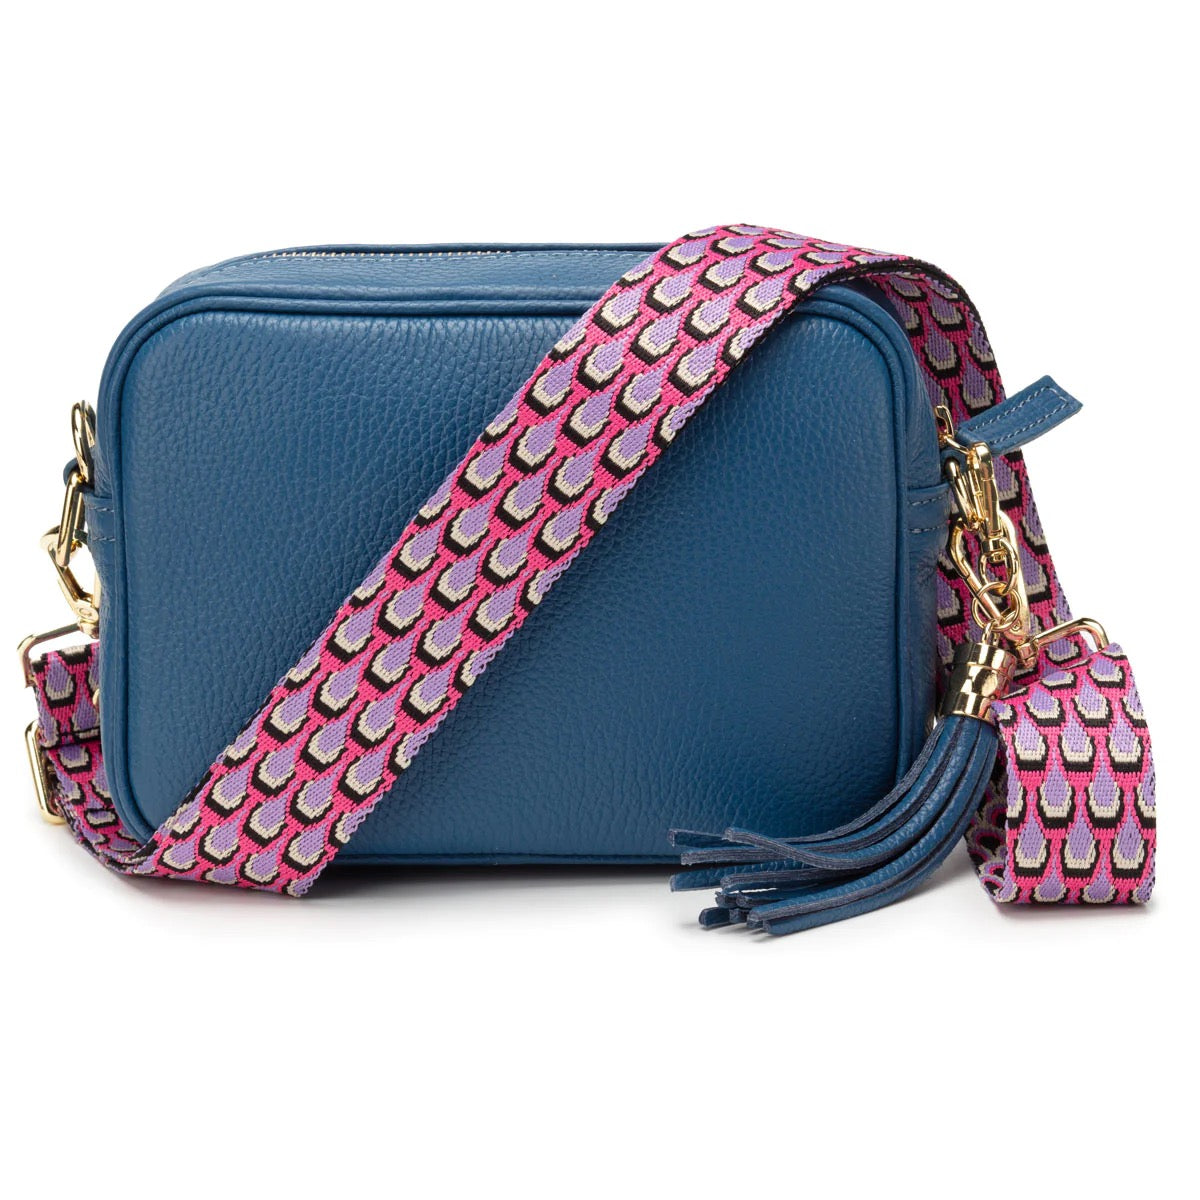 Elie Beaumont Designer PINK/LILAC PEACOCK Adjustable Crossbody Bag Strap (GOLD Fittings)